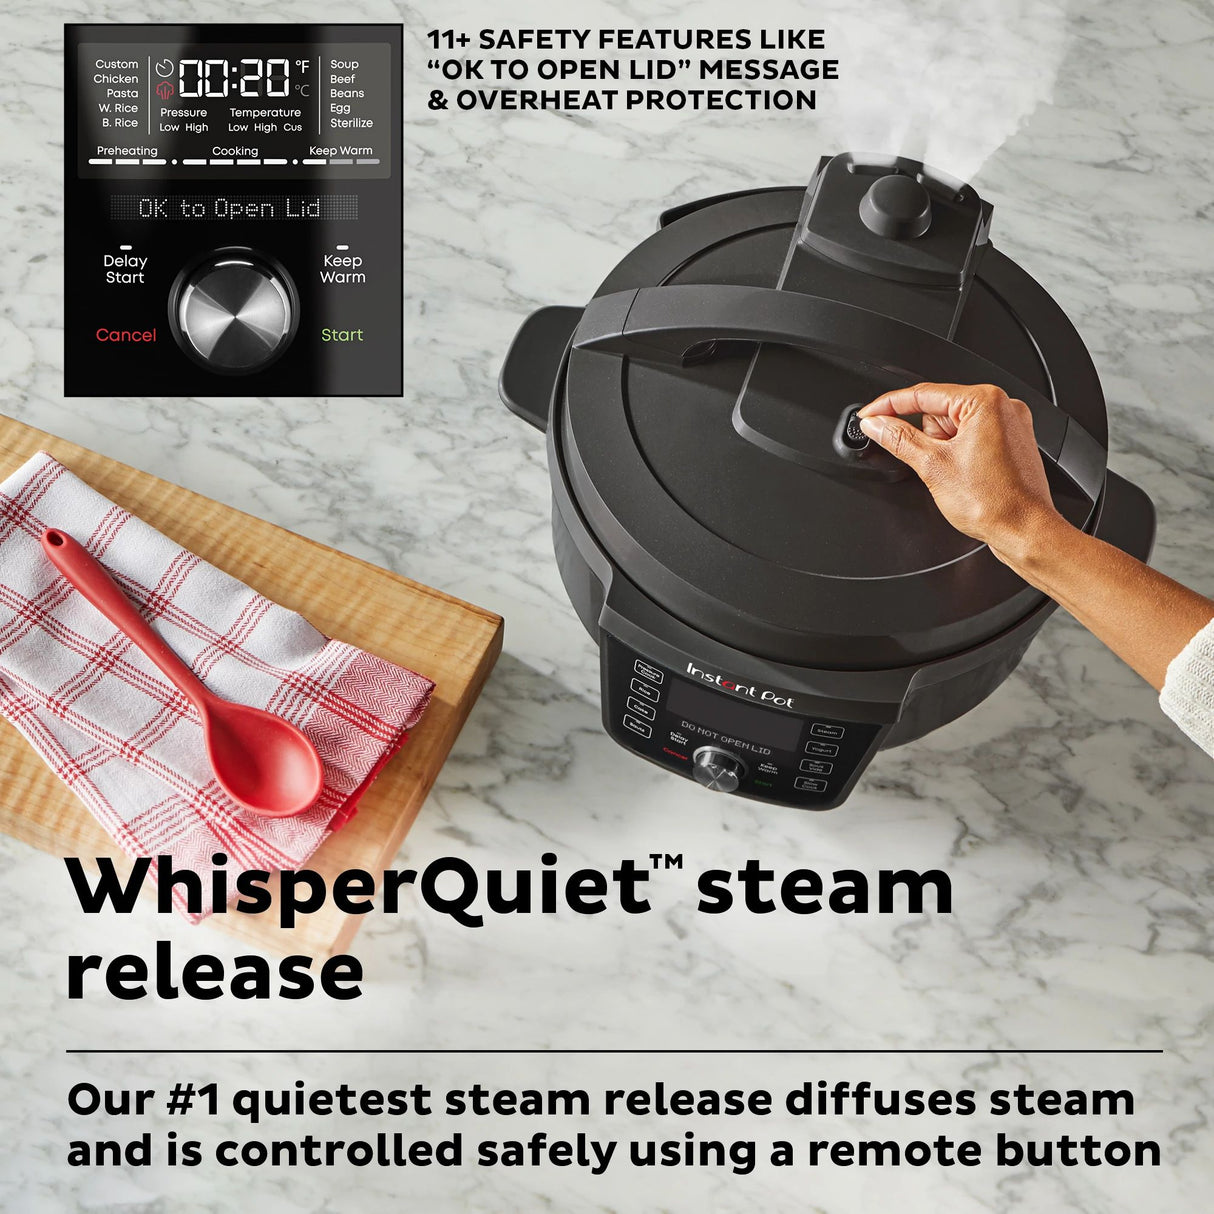  Instant Pot RIO 7.5-quart Multicooker with text WhisperQuiet steam release